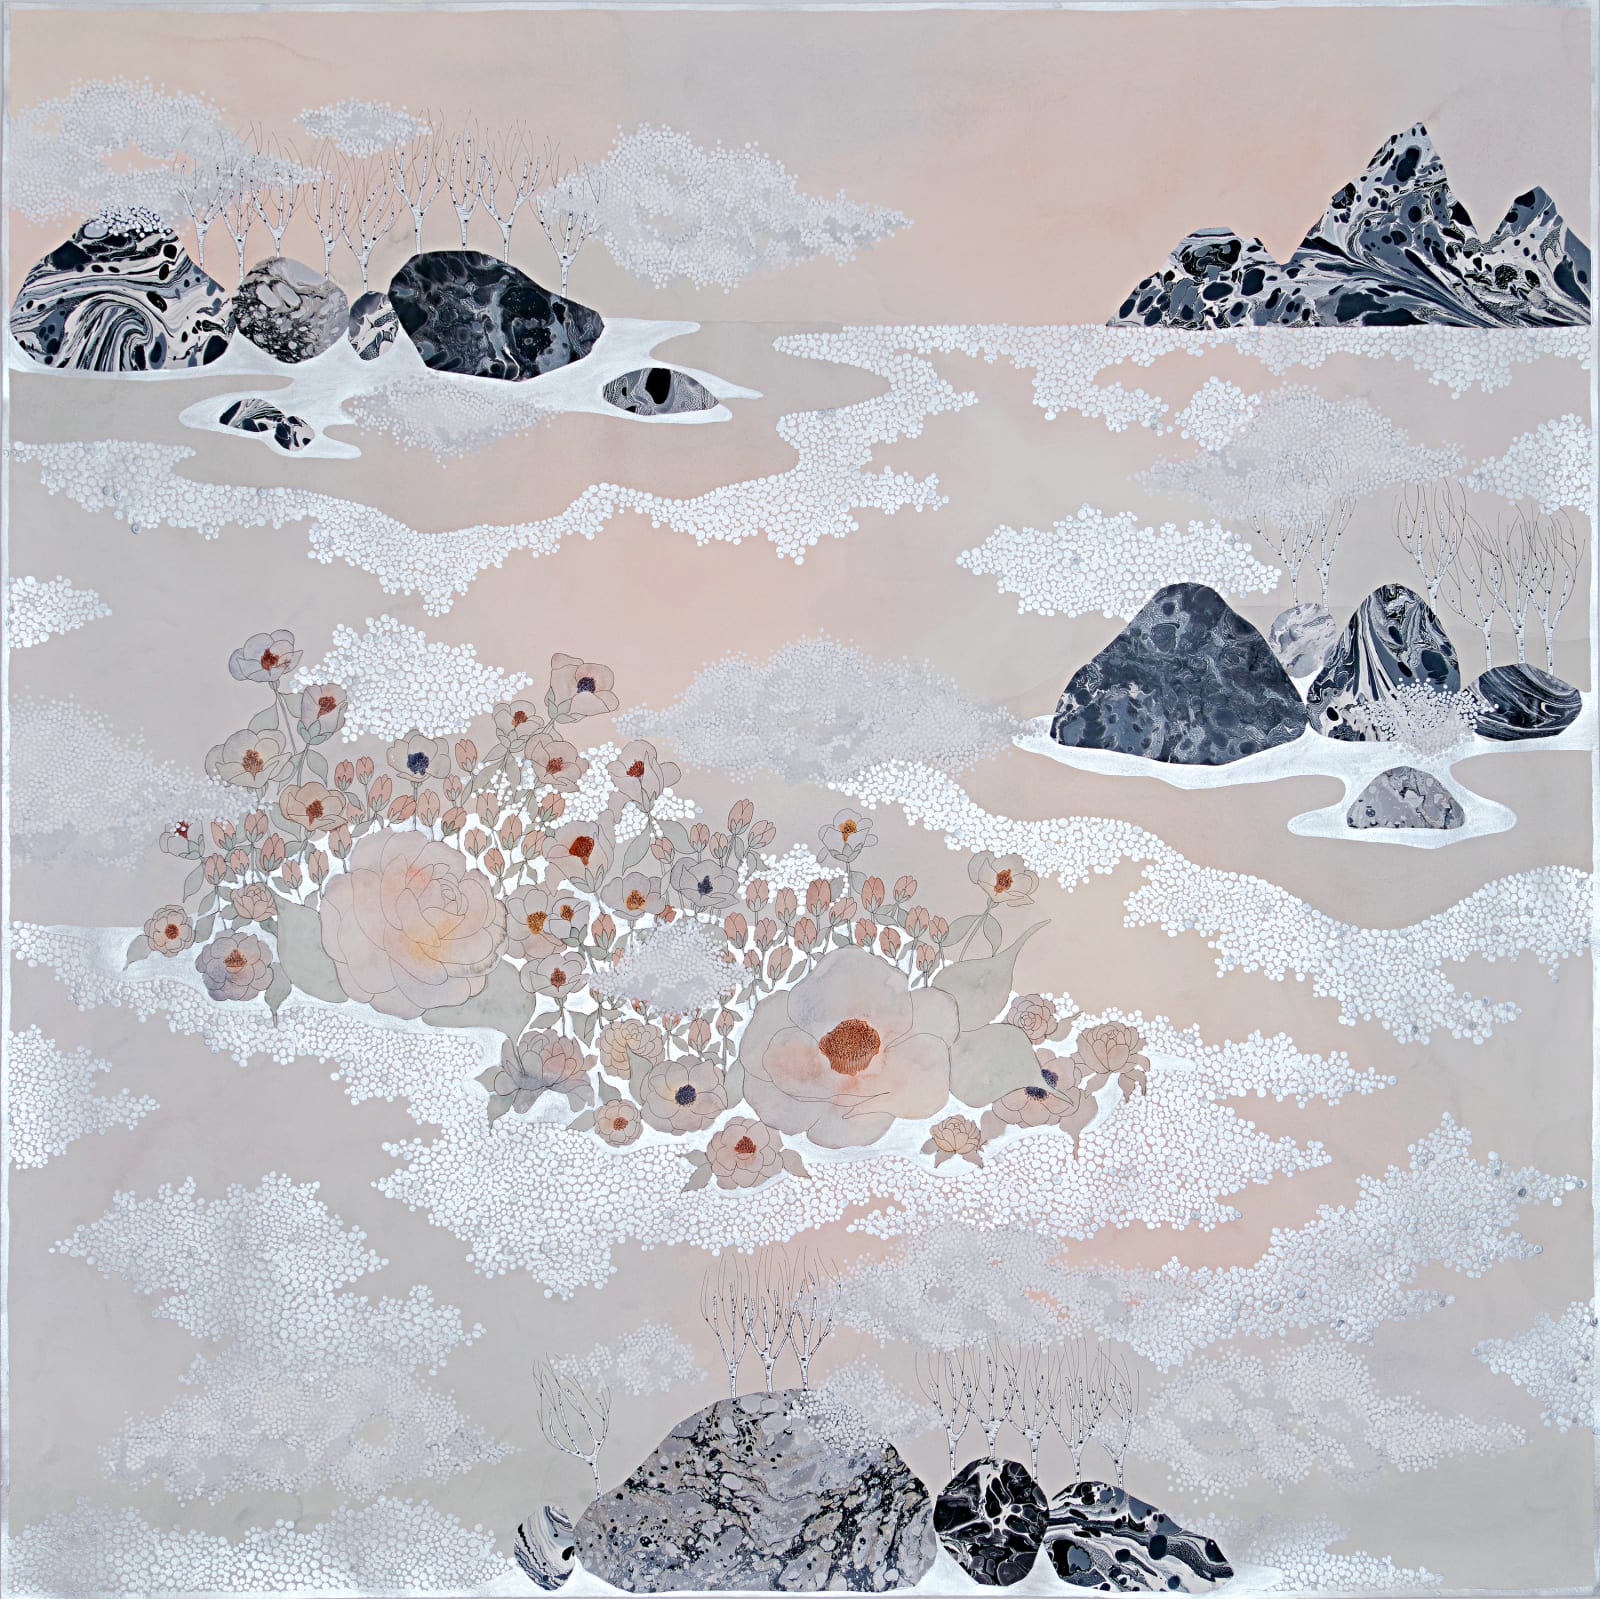 Crystal Liu, the fog, "huddling together", 2019